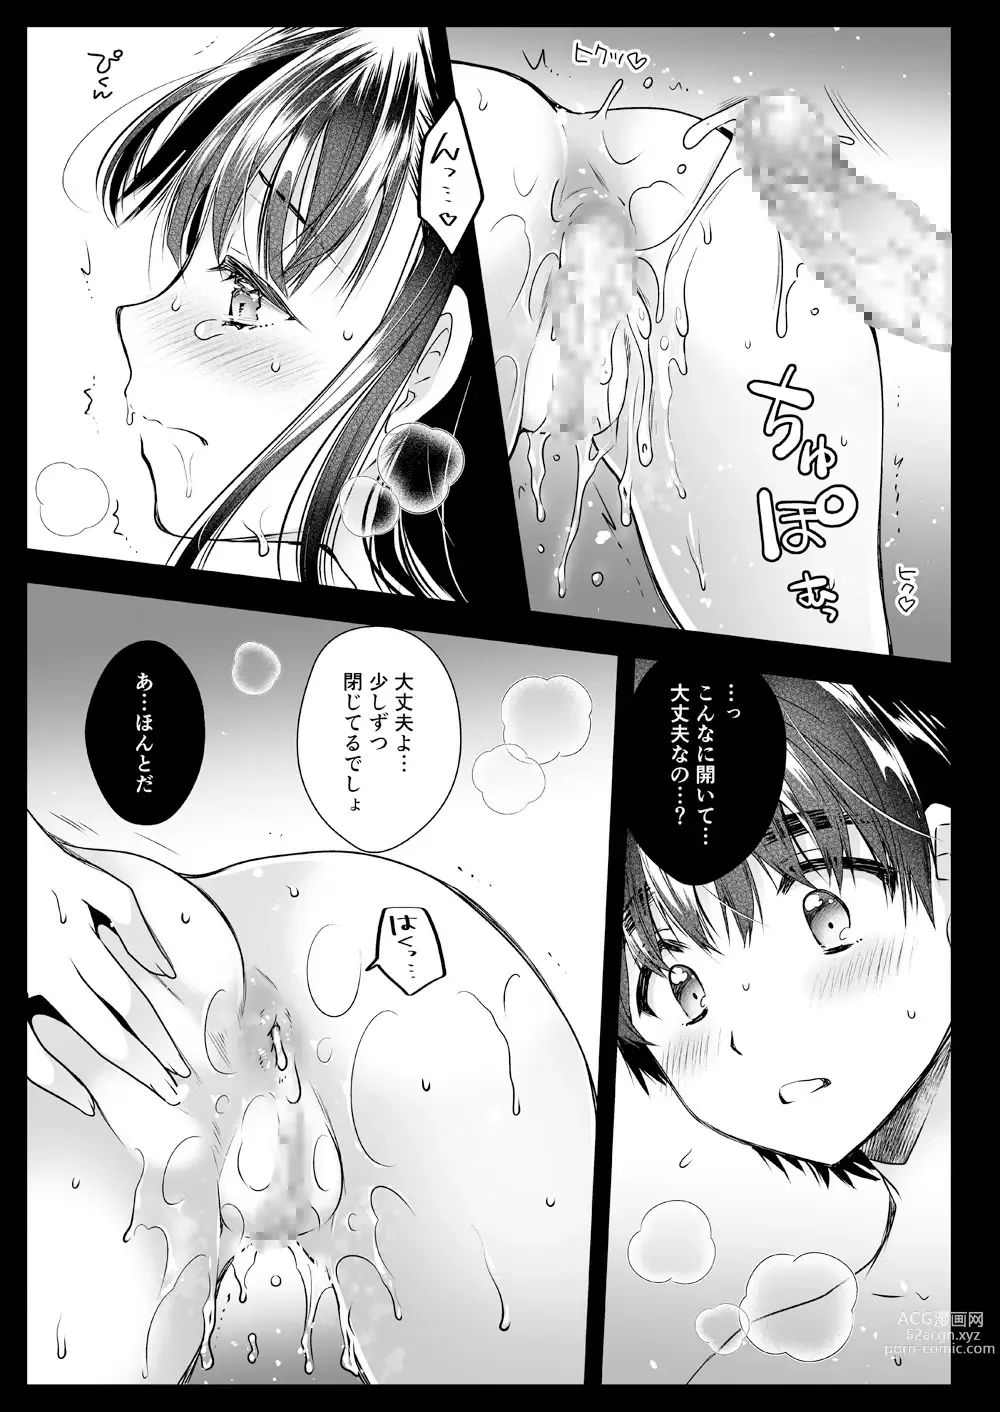 Page 24 of manga Kyou izon Kyoudai